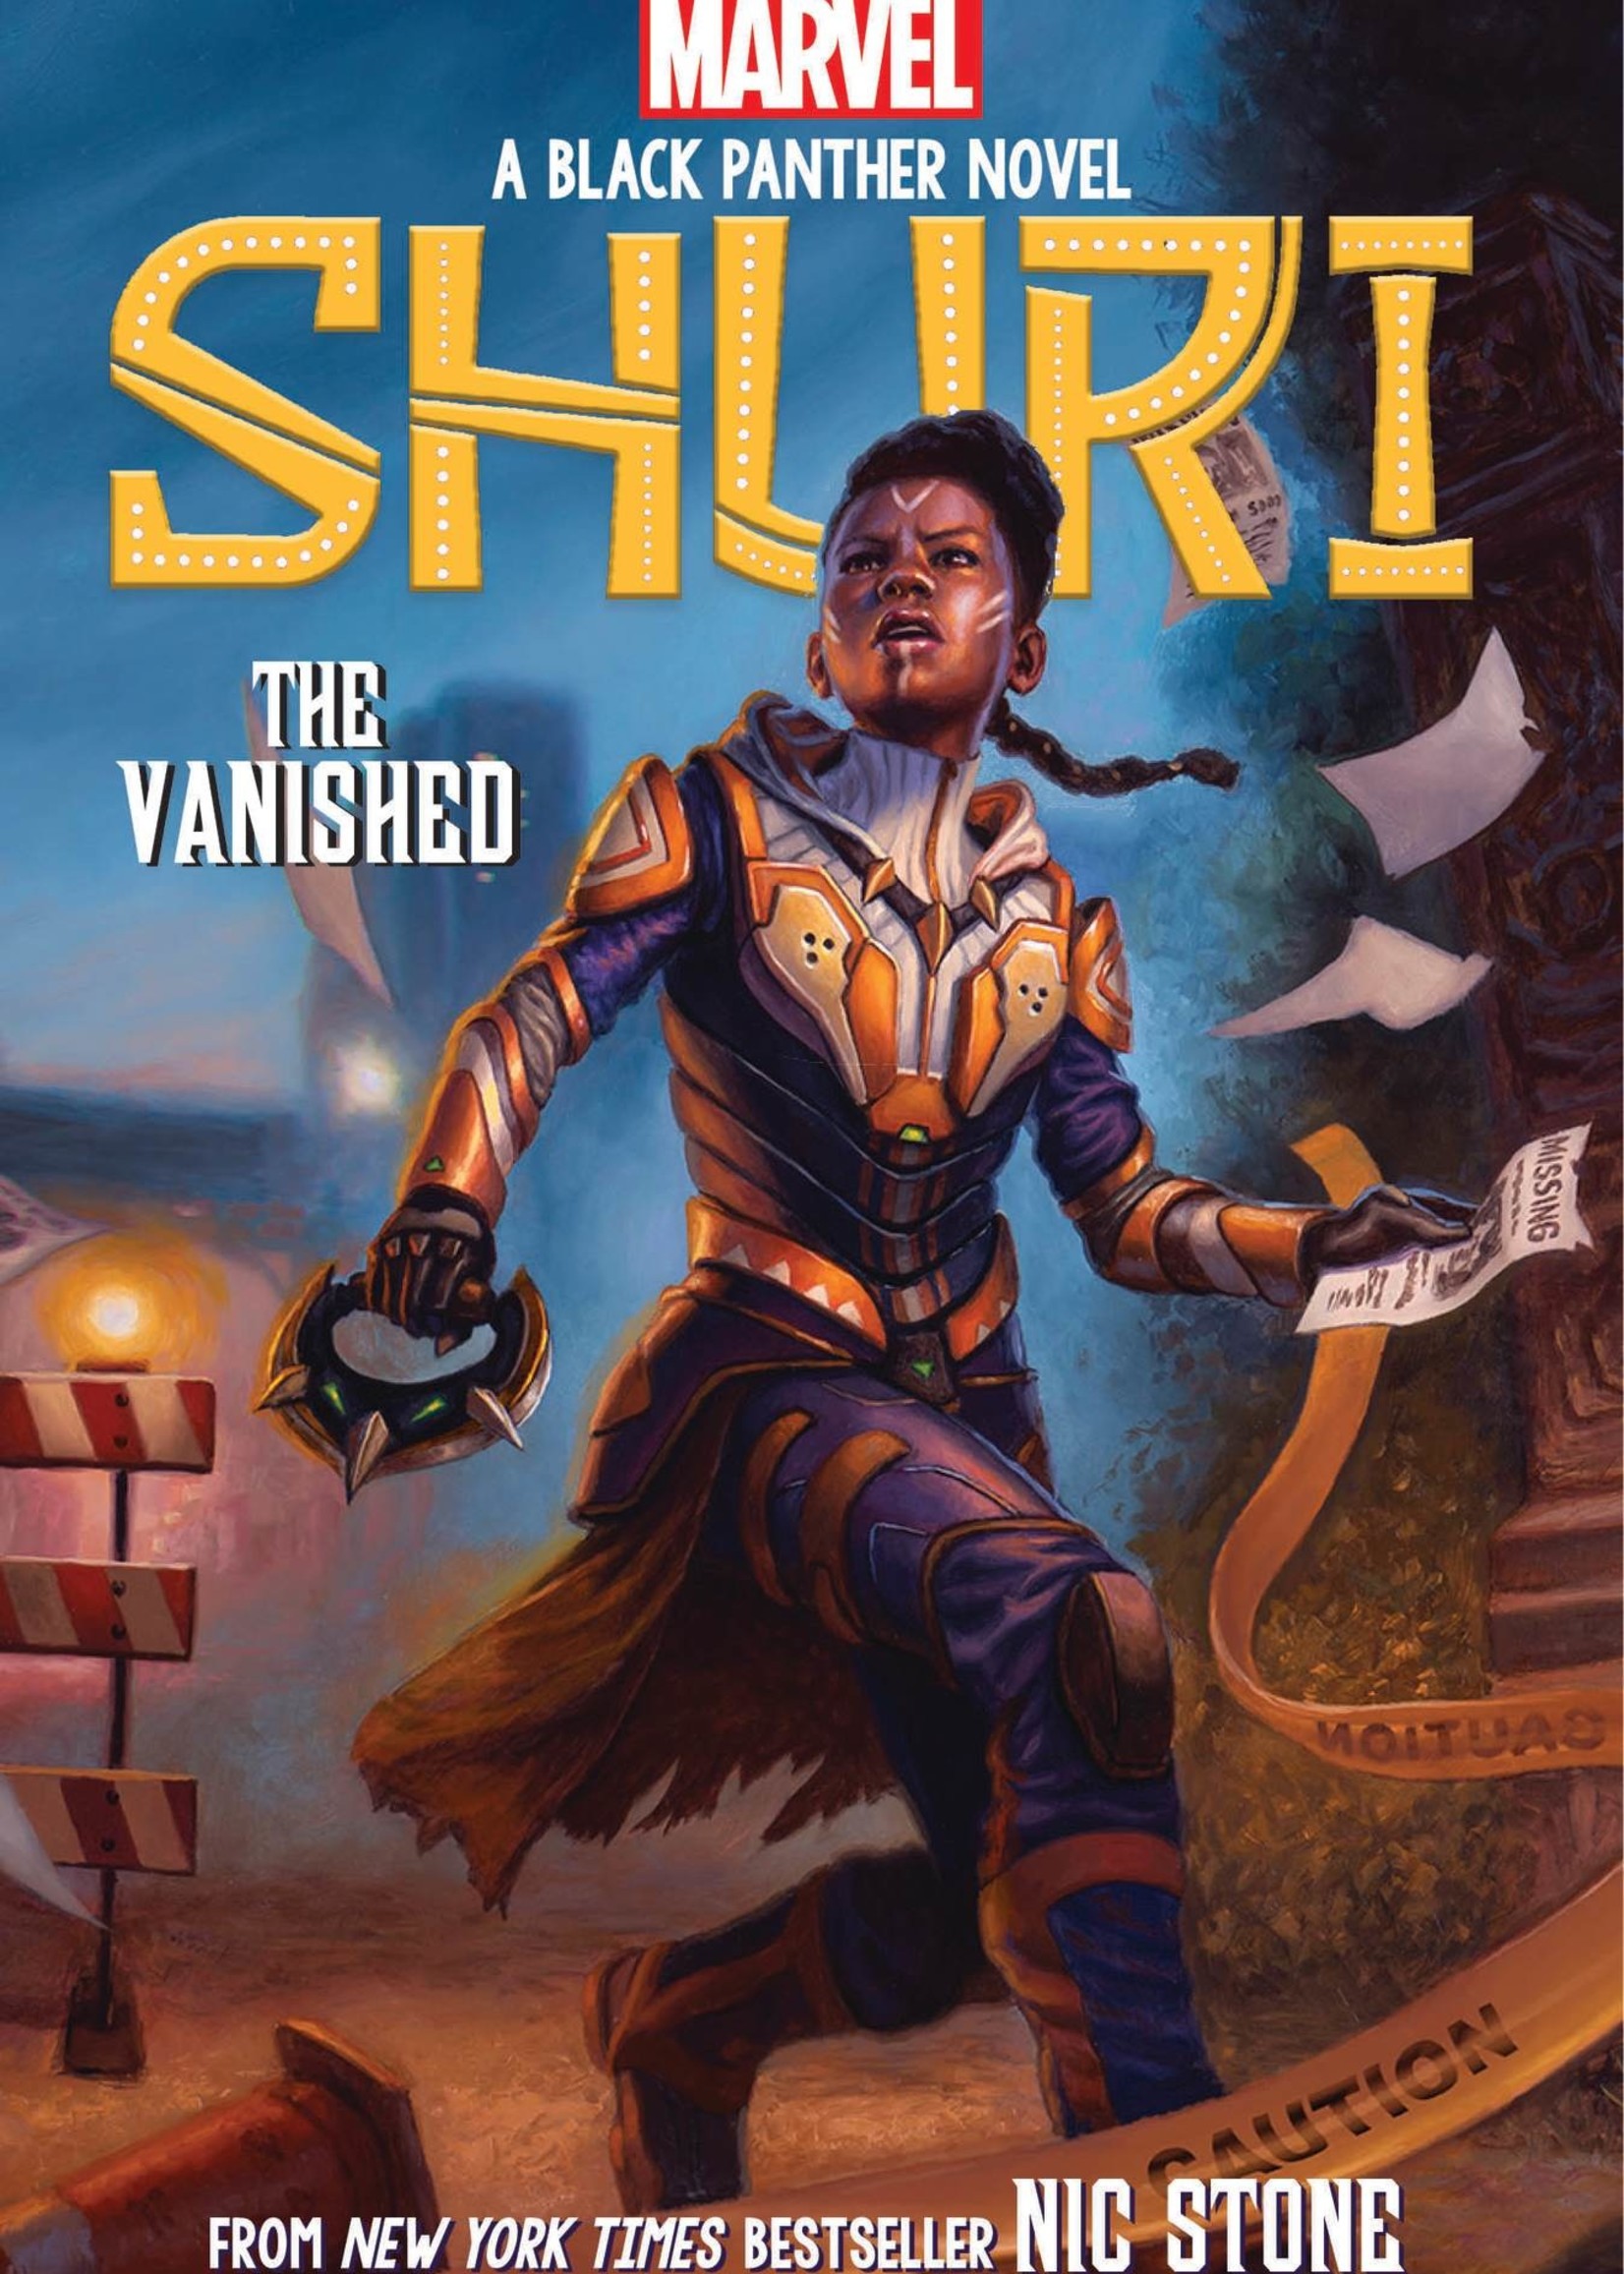 The Vanished (Shuri #2) by Nic Stone